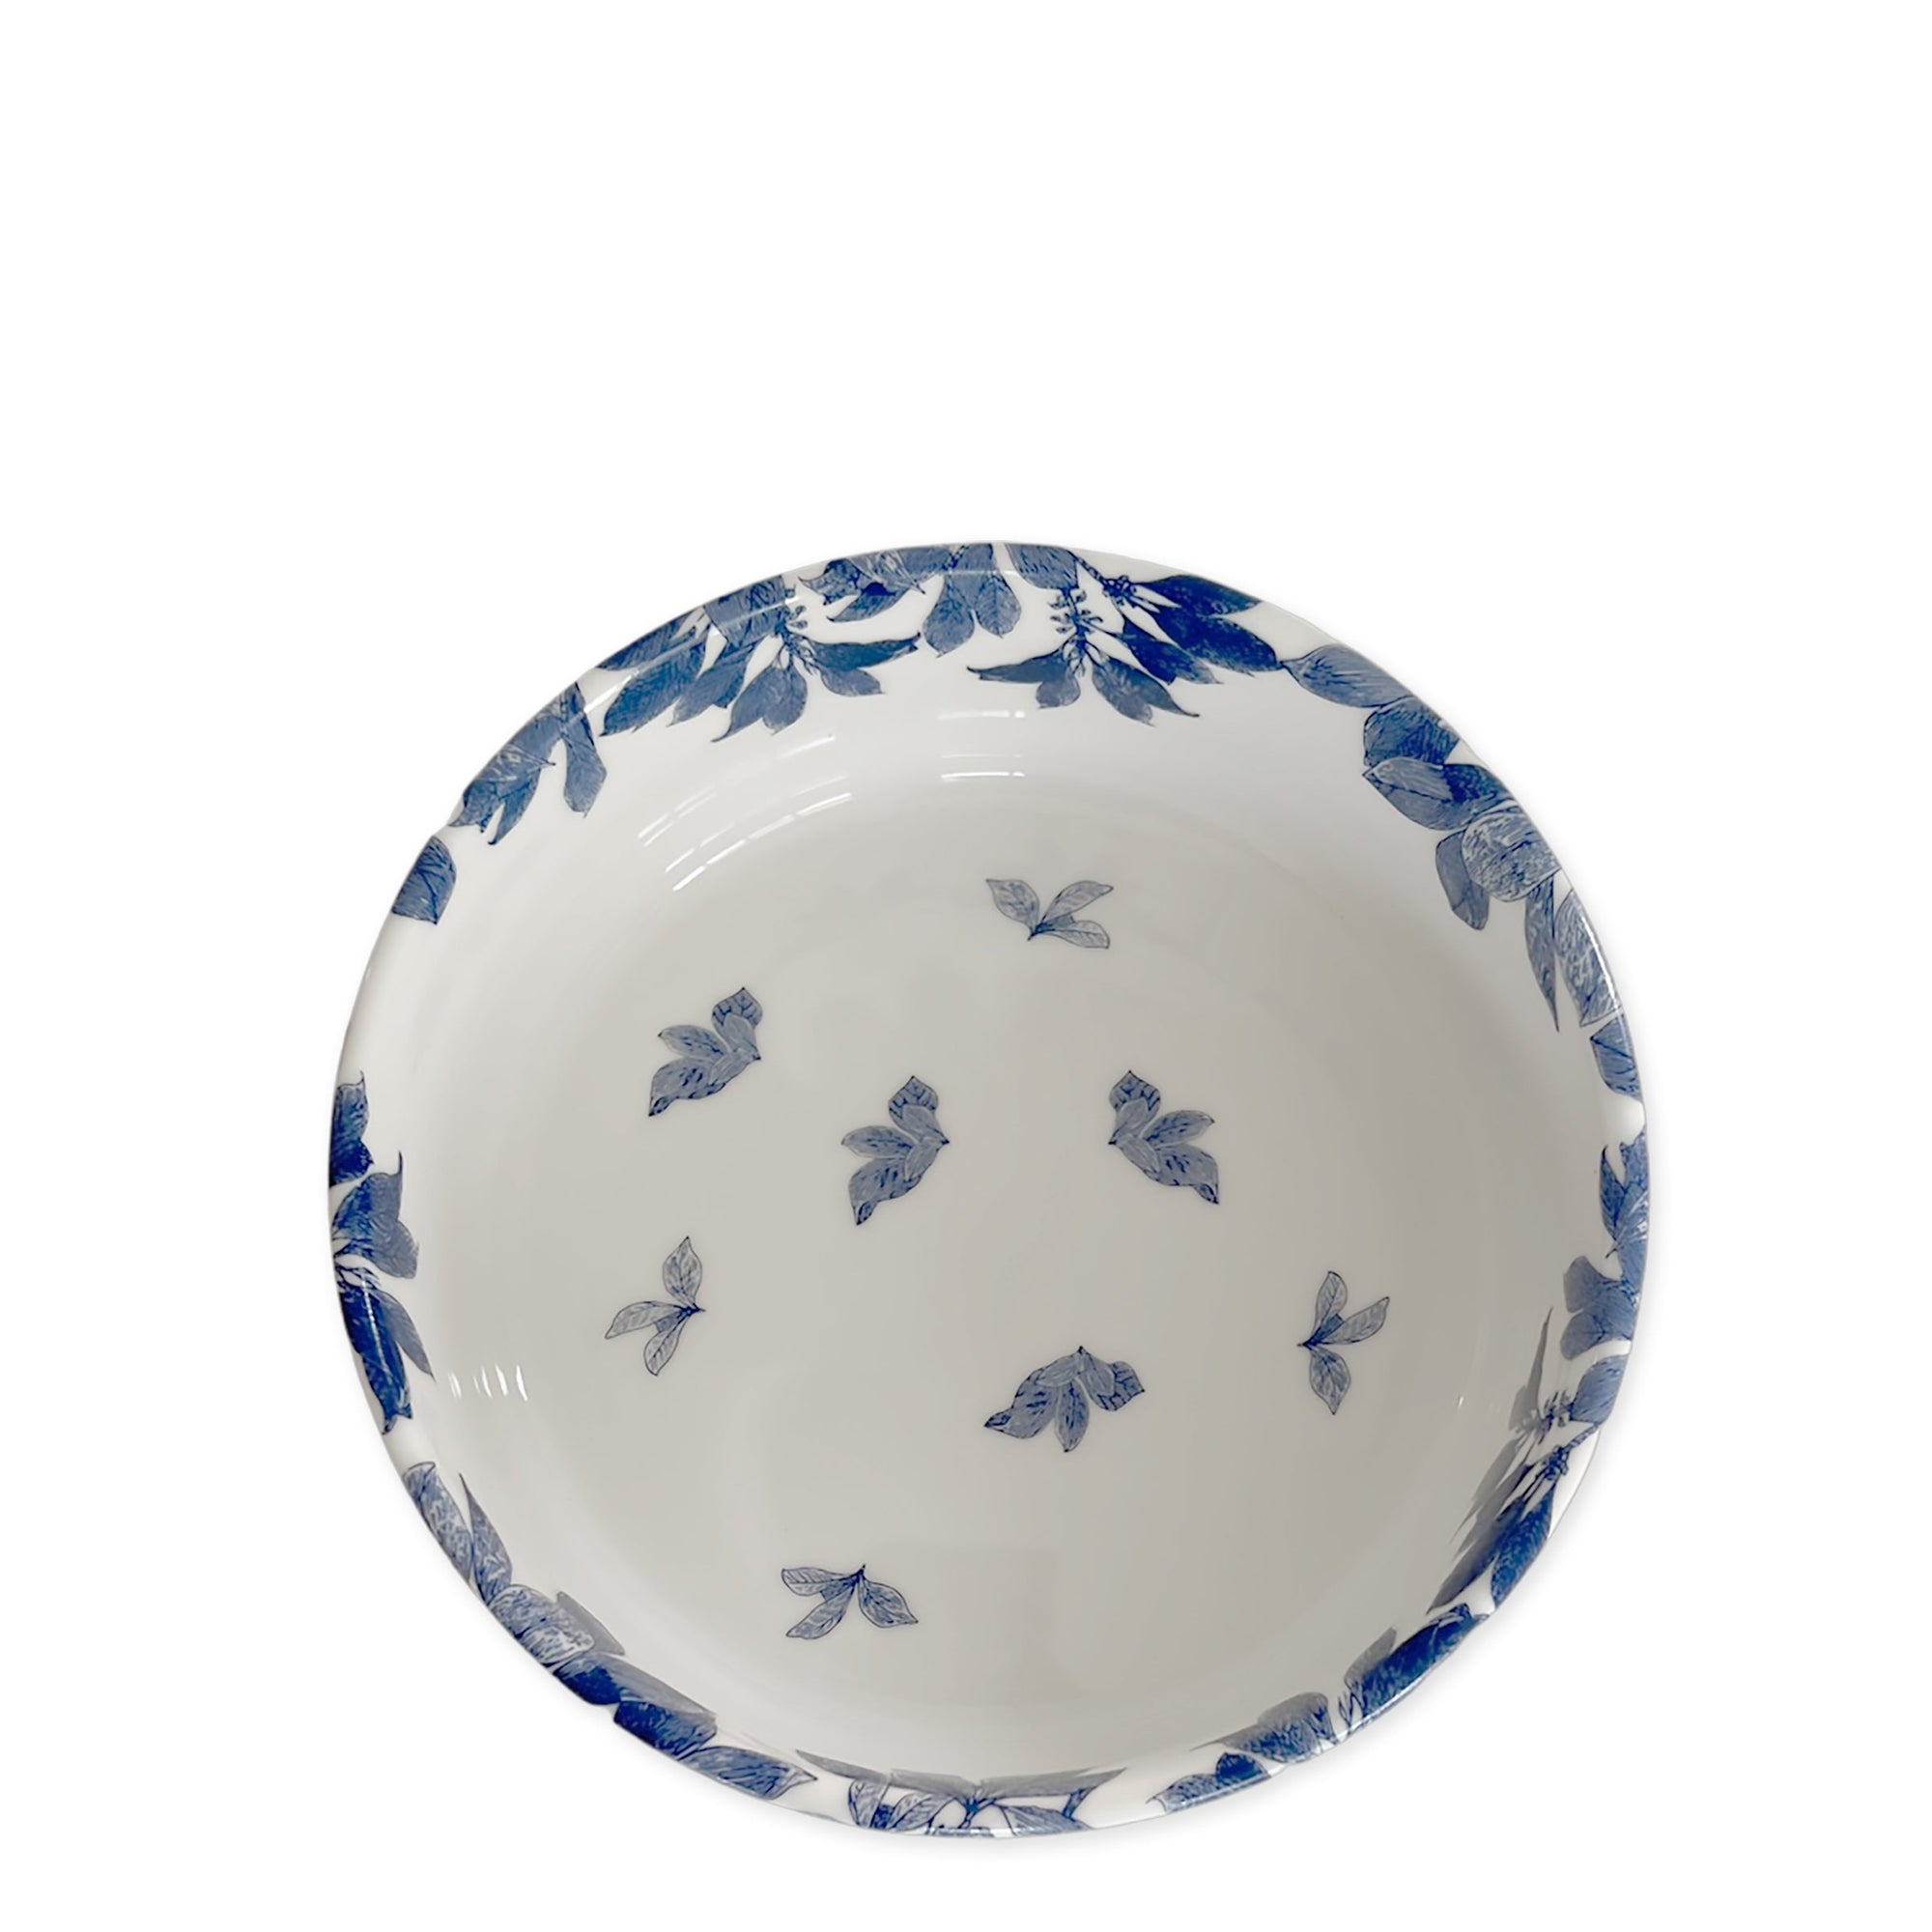 Arbor blue and white premium porcelain pet bowl from Caskata.